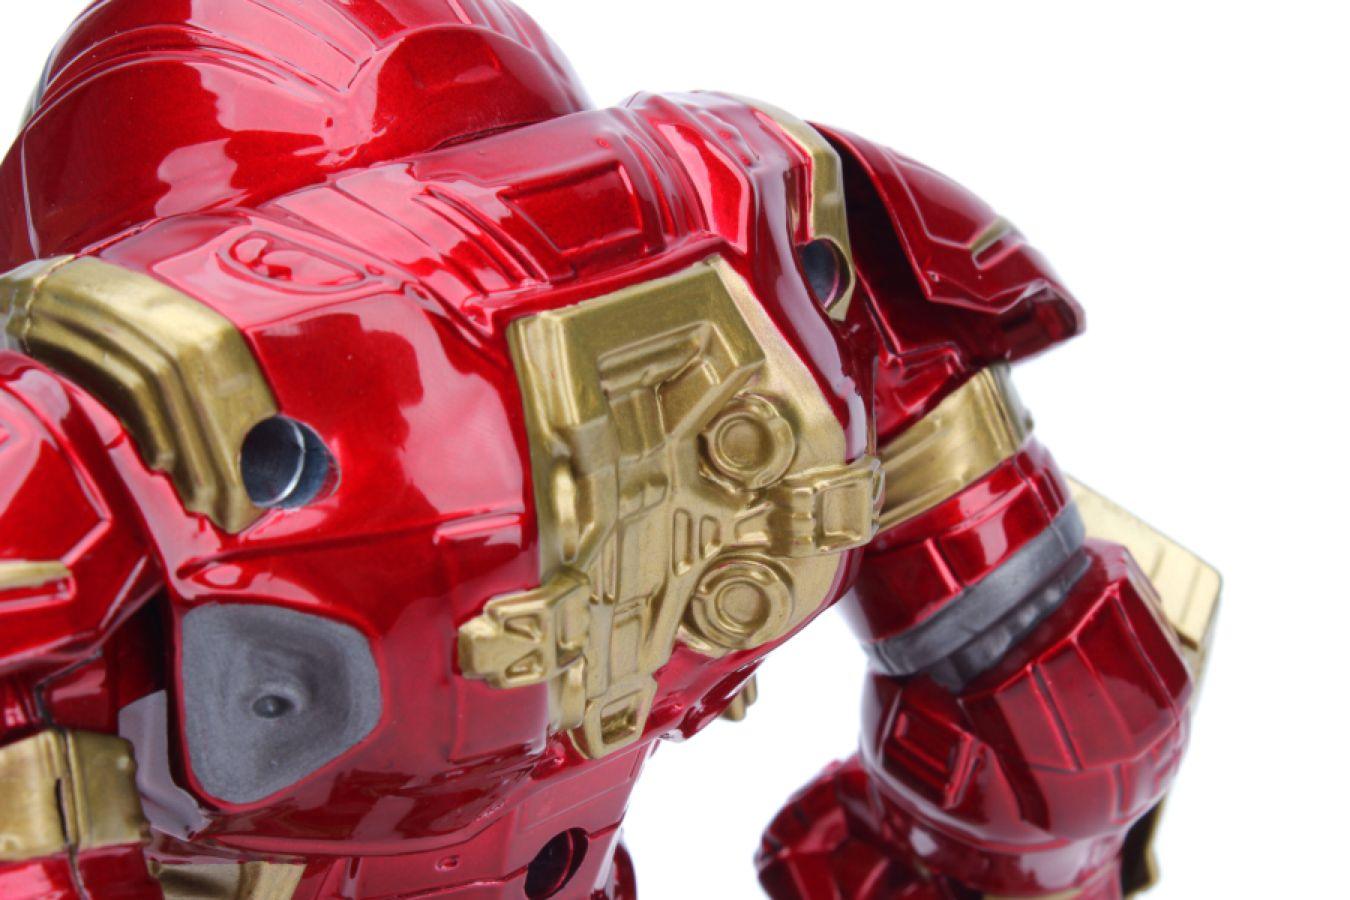 JAD33431 Avengers: Age of Ultron - Hulkbuster 6" & Iron Man 2.5" MetalFig 2-Pack - Jada Toys - Titan Pop Culture